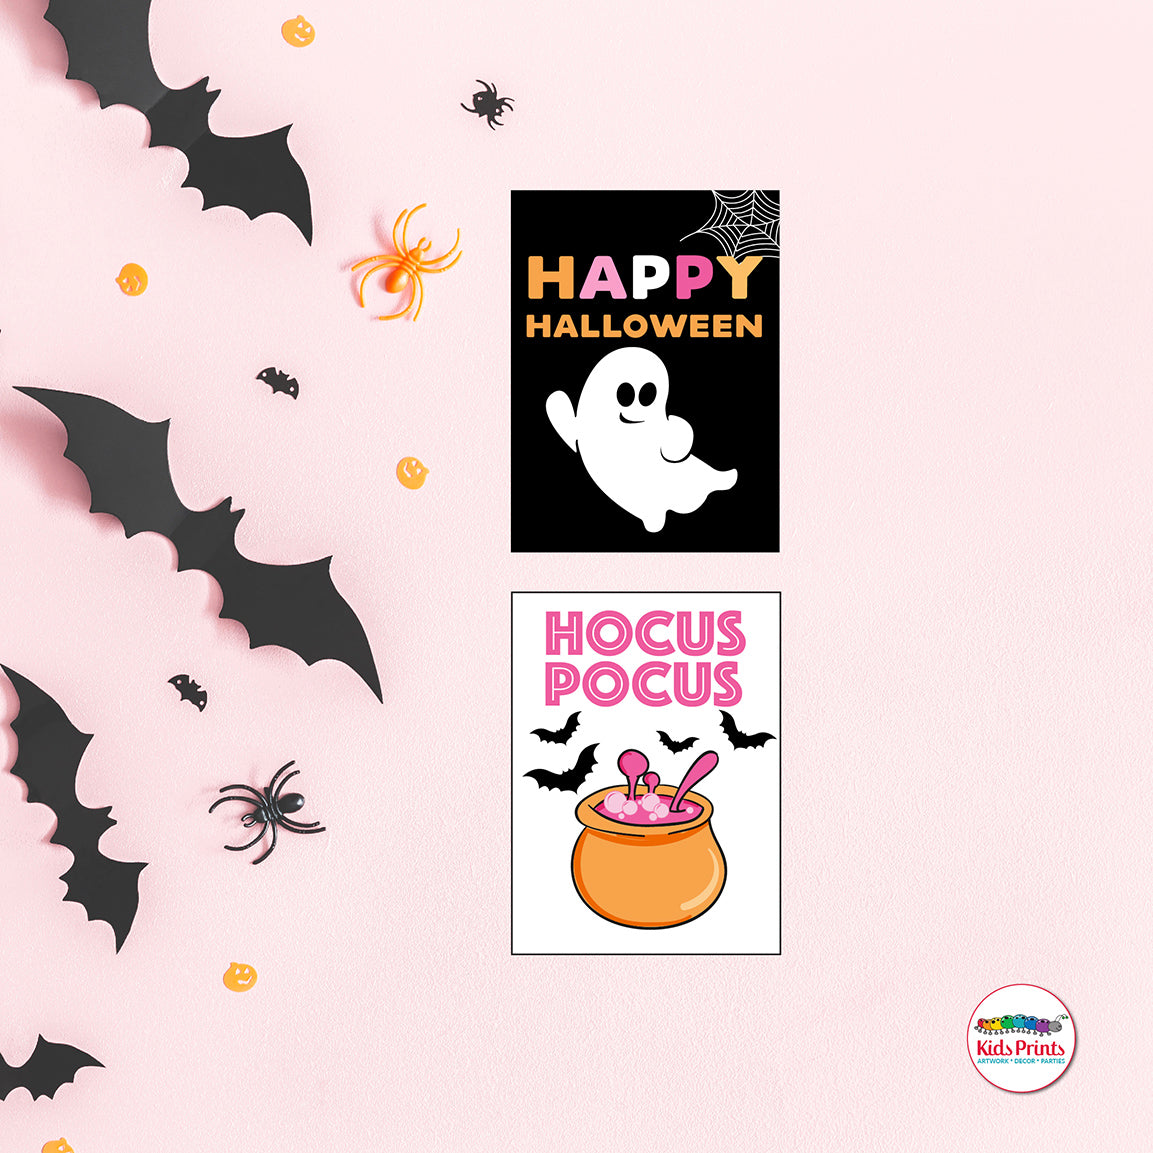 Halloween | Tags | Kids Prints